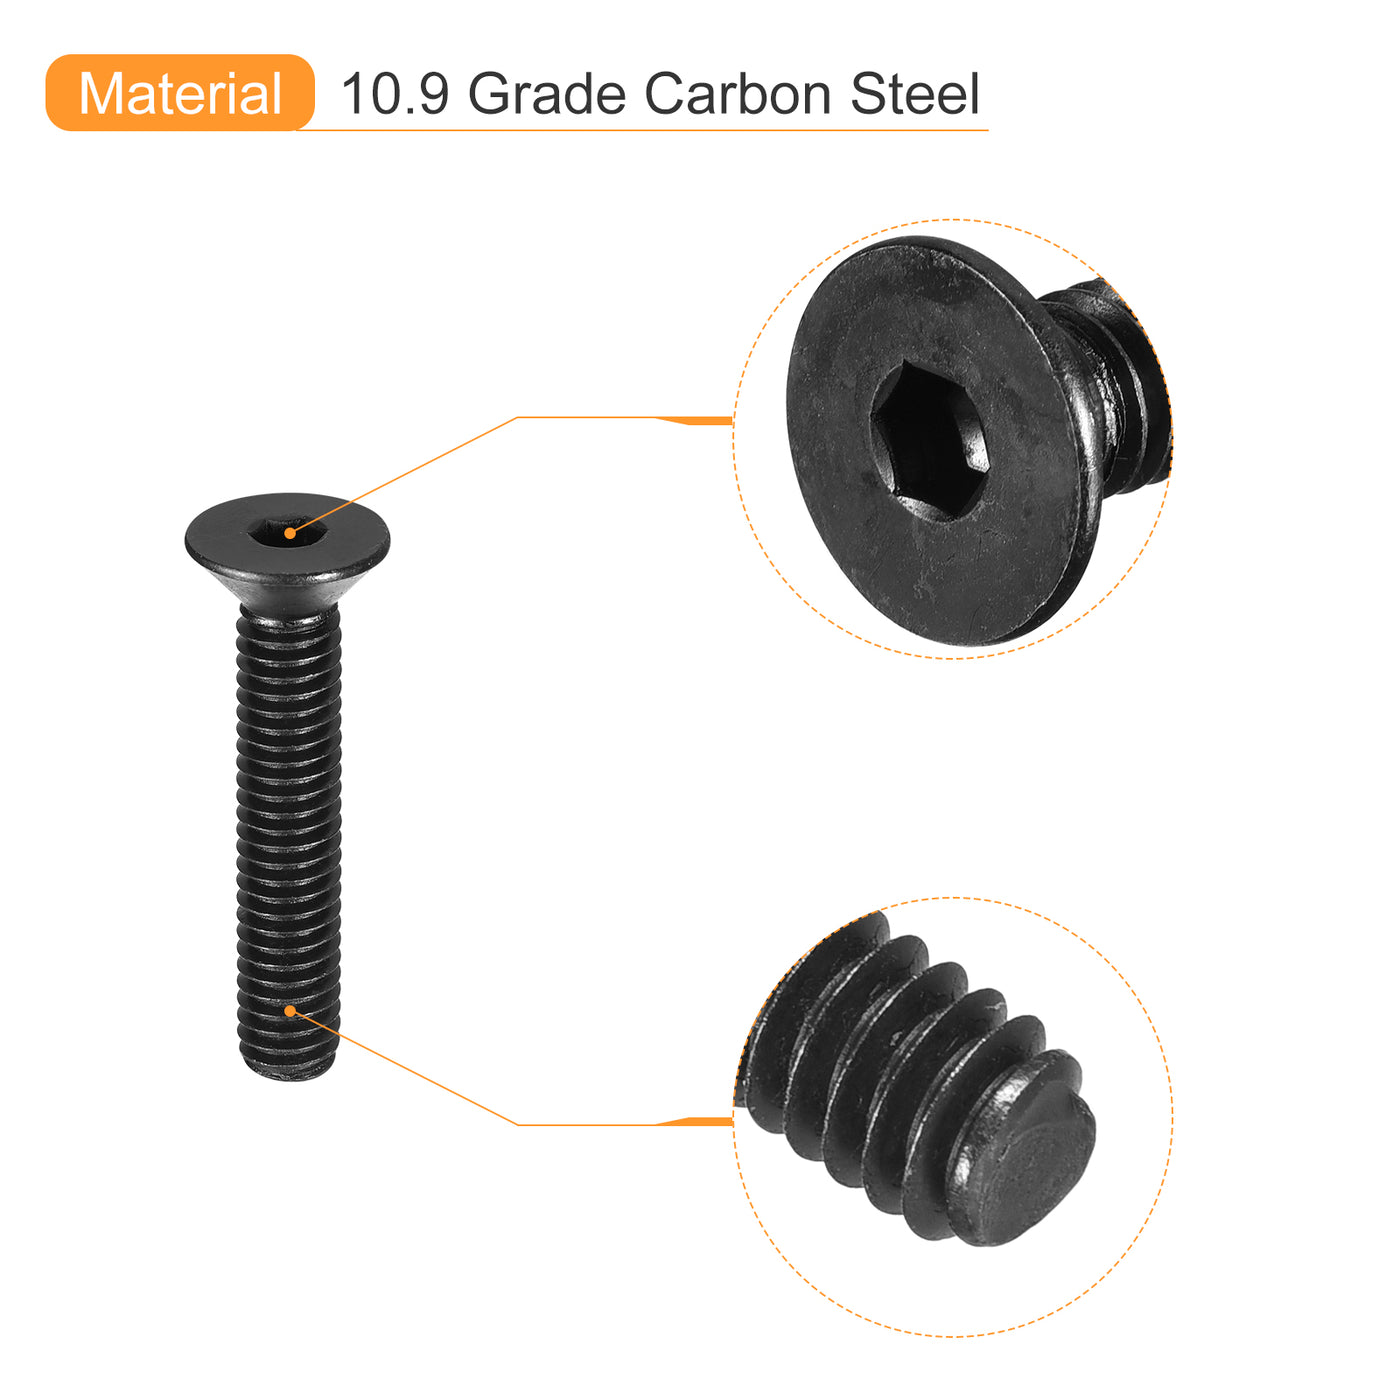 uxcell Uxcell 5/16-18x1-3/4" Flat Head Socket Cap Screws, 10.9 Grade Carbon Steel, 10PCS